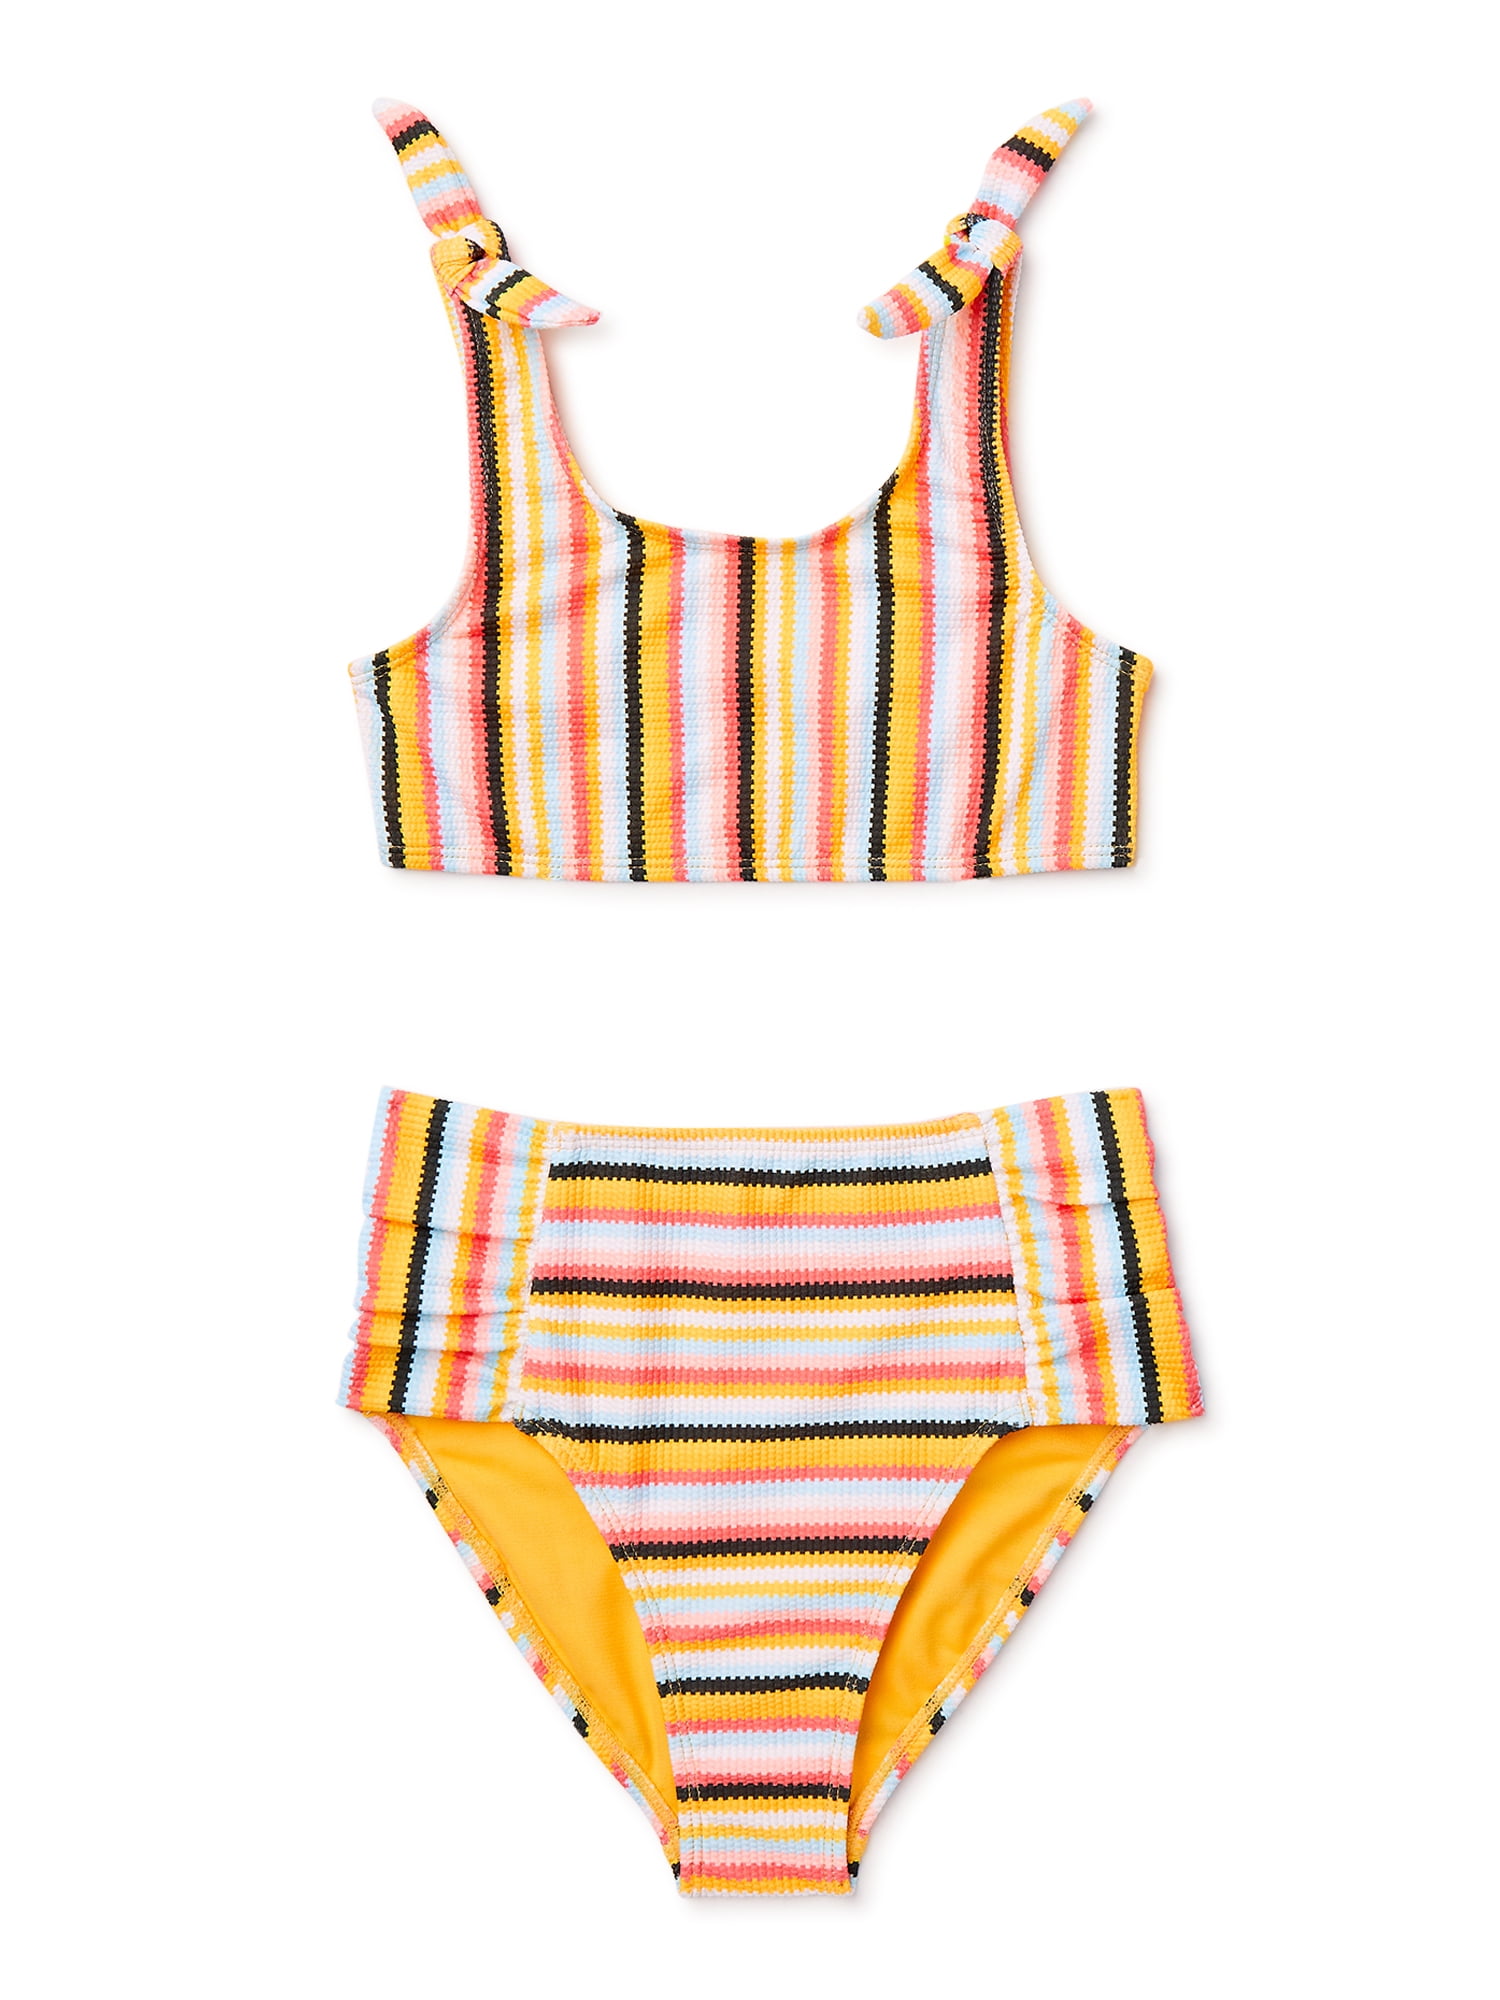 Tiny Cutey Infant Baby Girl 4th of July Swimsuit Ruffle Stars Stripe Swimwear Two Pieces Bikini Sets Beachwear Bathing Suits